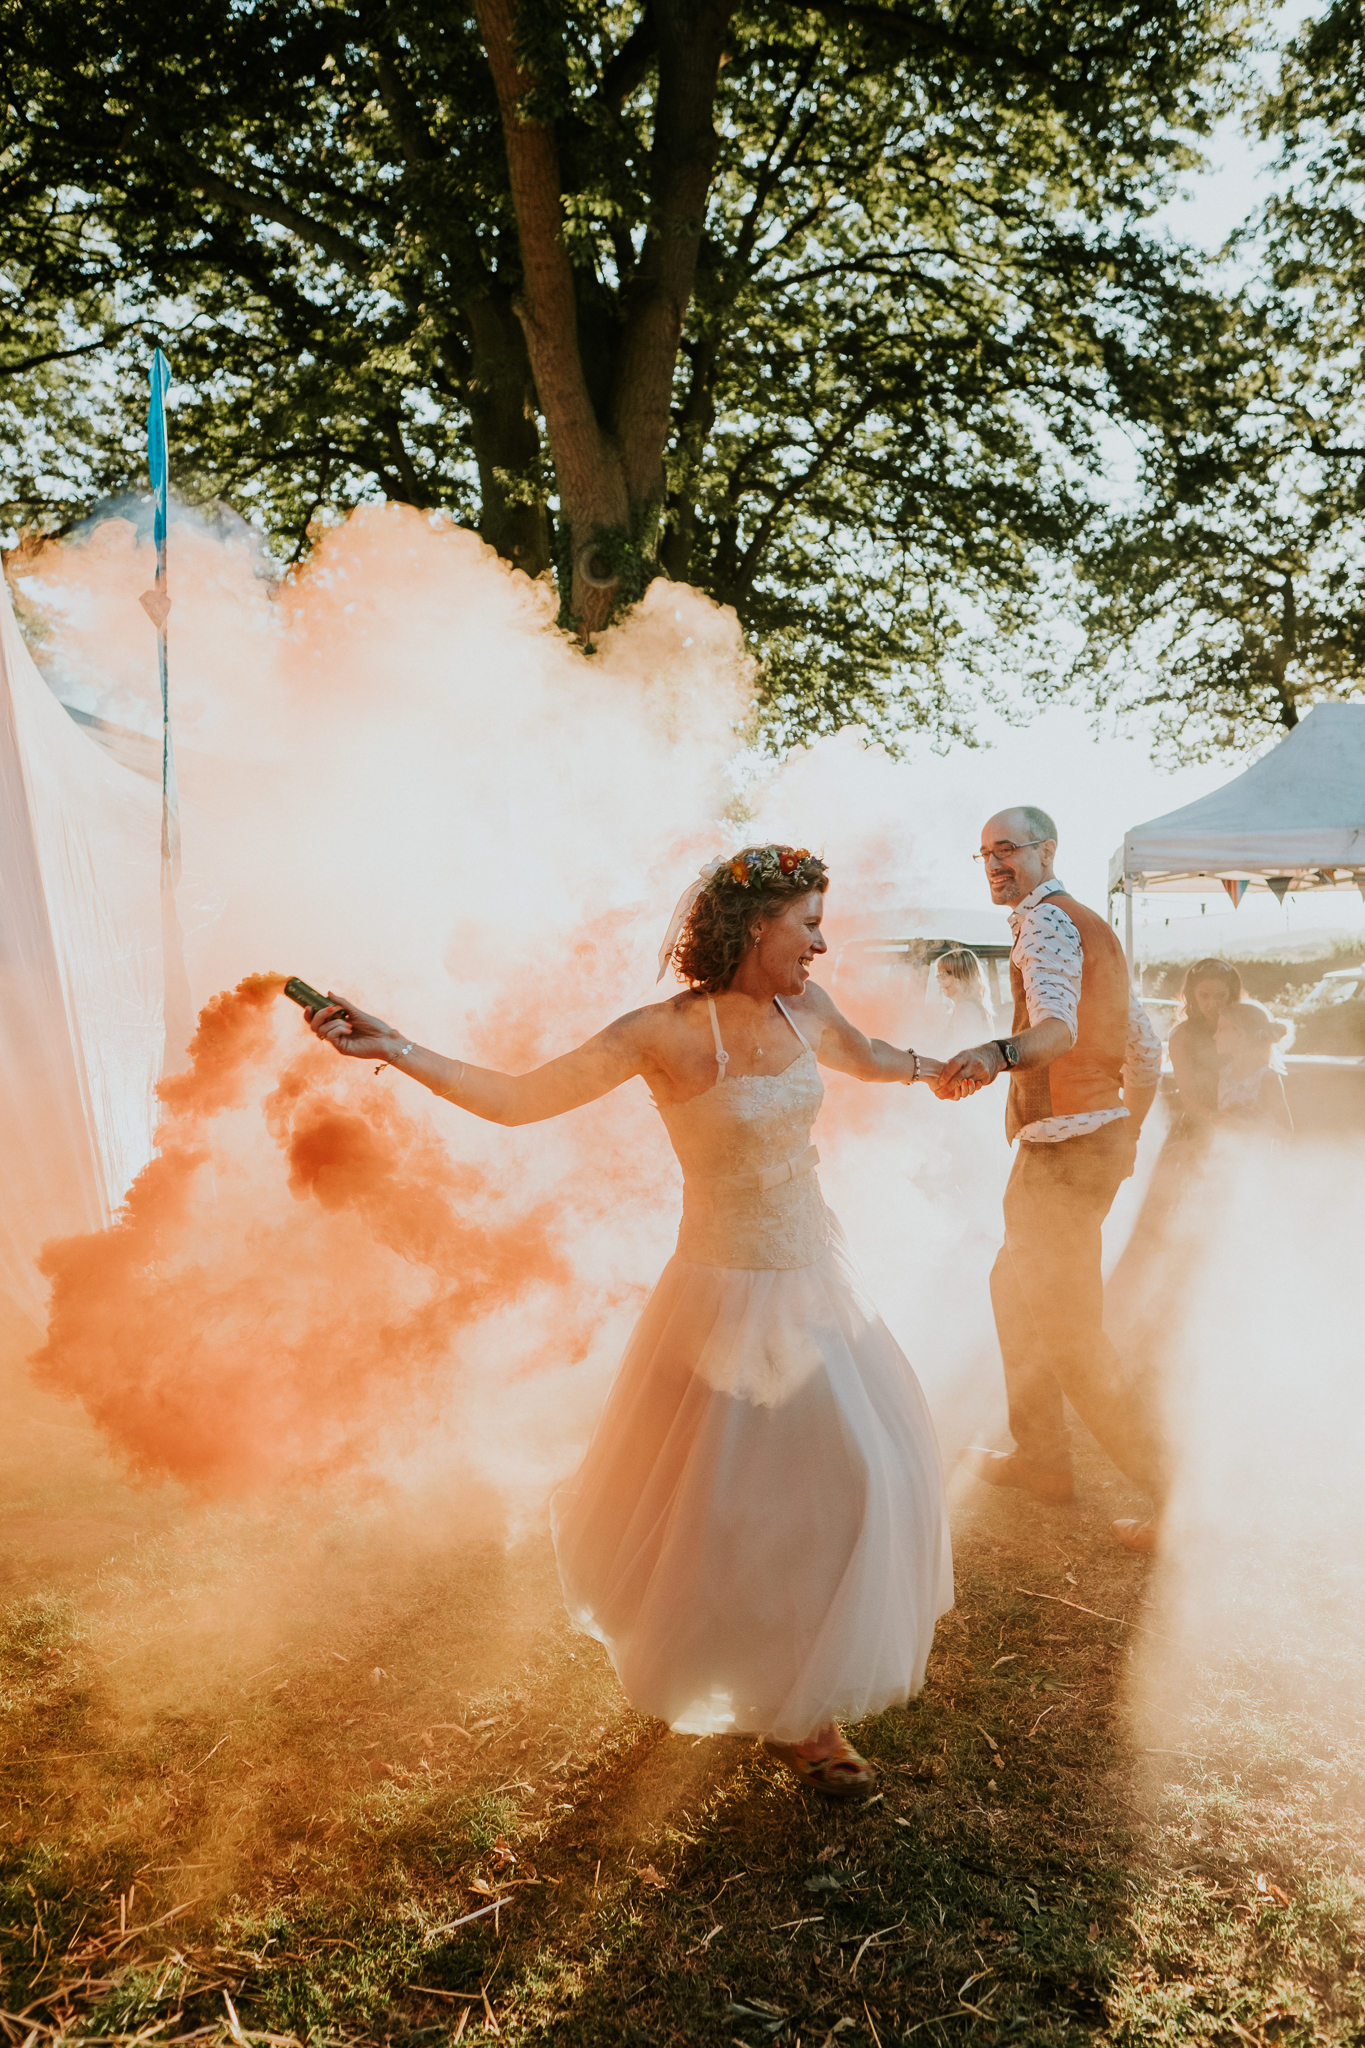 40 Festival wedding smoke bombs fun creative cool joanna nicole photography3.jpg